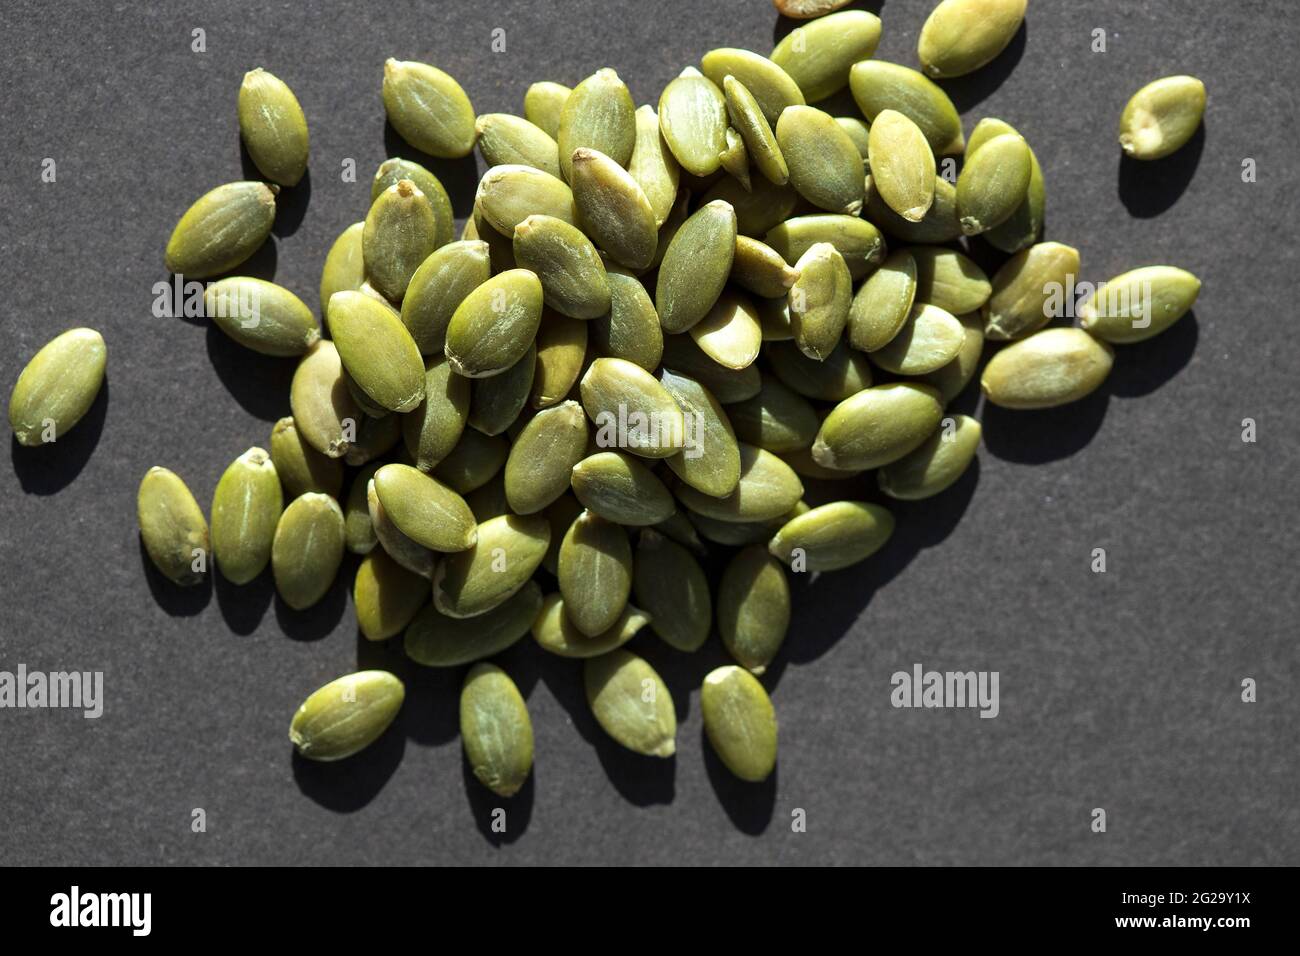 Organic pumpkin seeds in close up view on dark background. Stock Photo